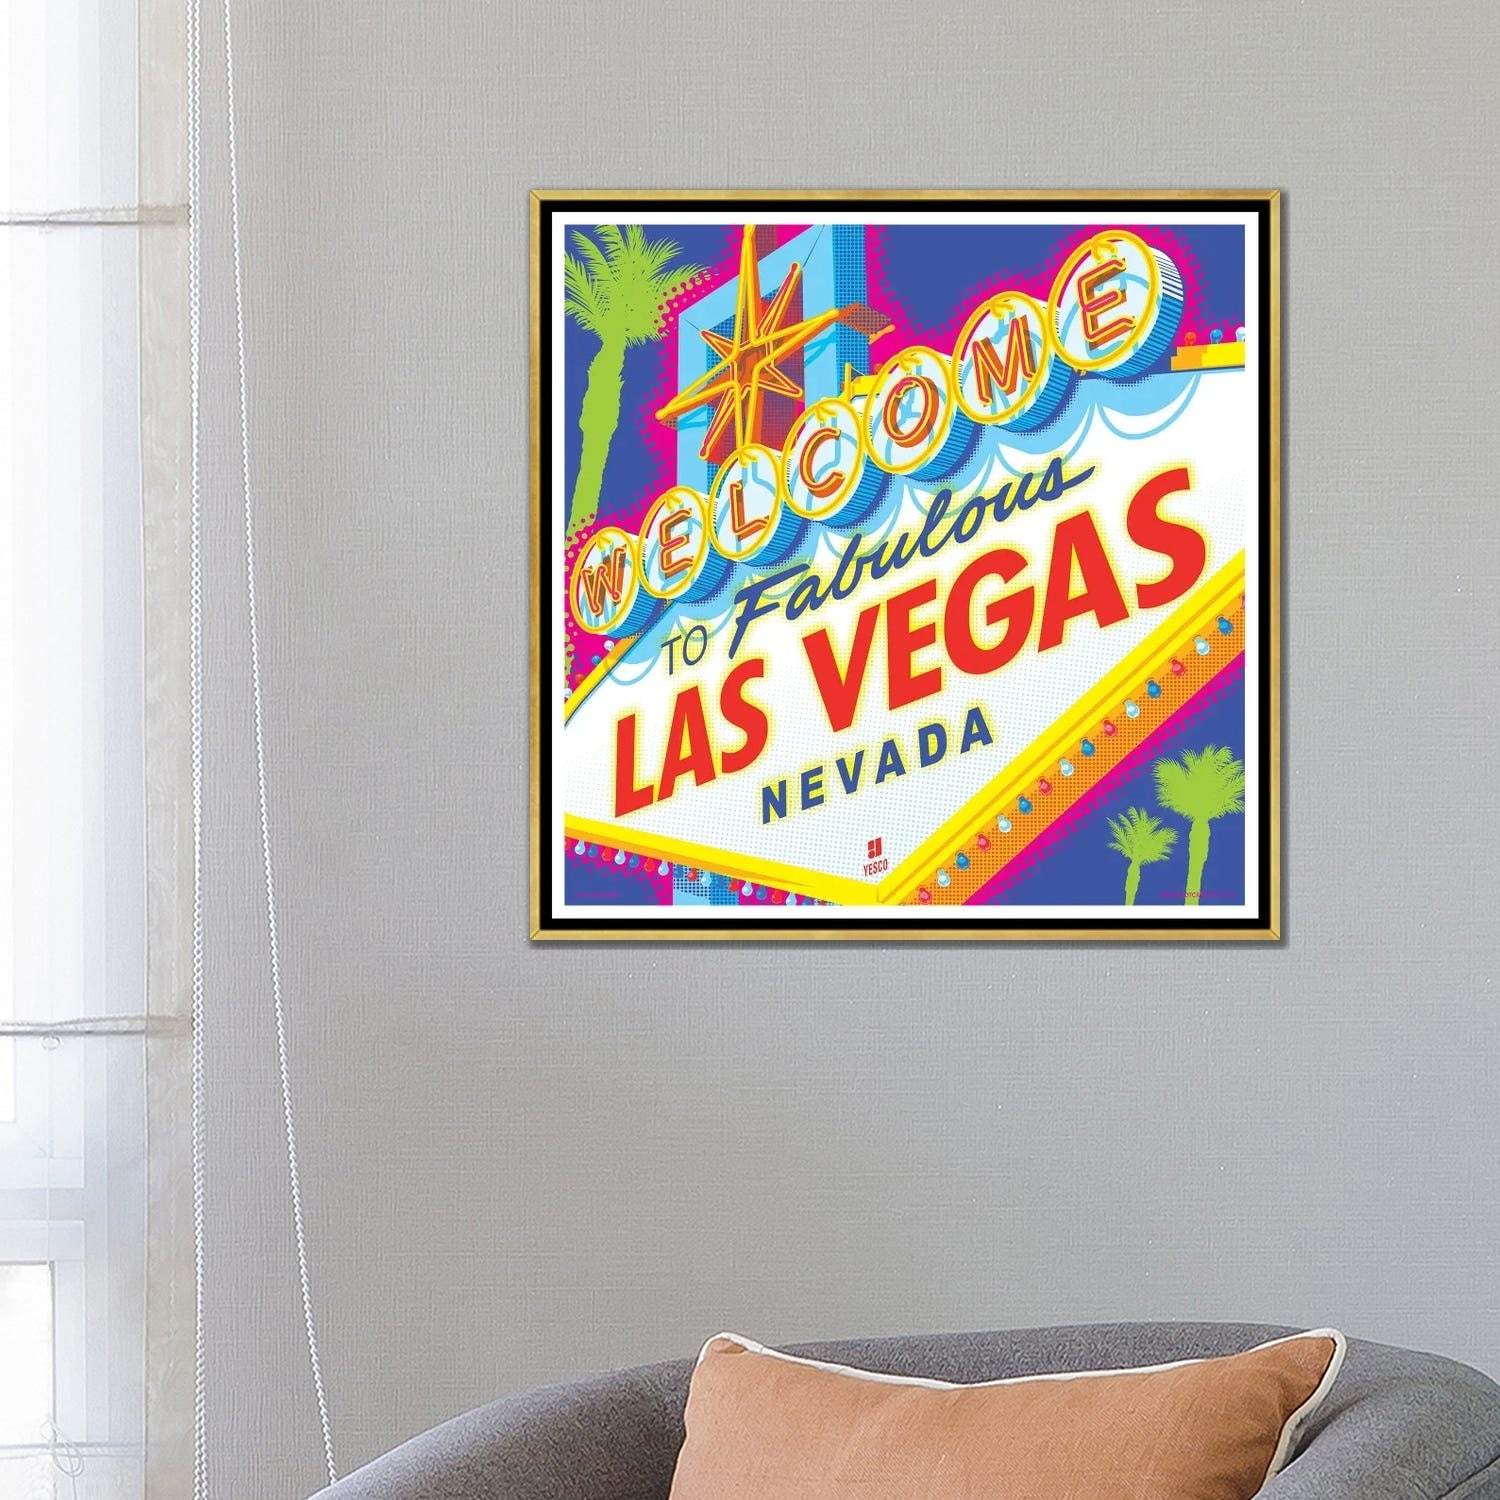 Welcom to Las Vegas Sign Pop Art Canvas Print / Canvas Art by Jim